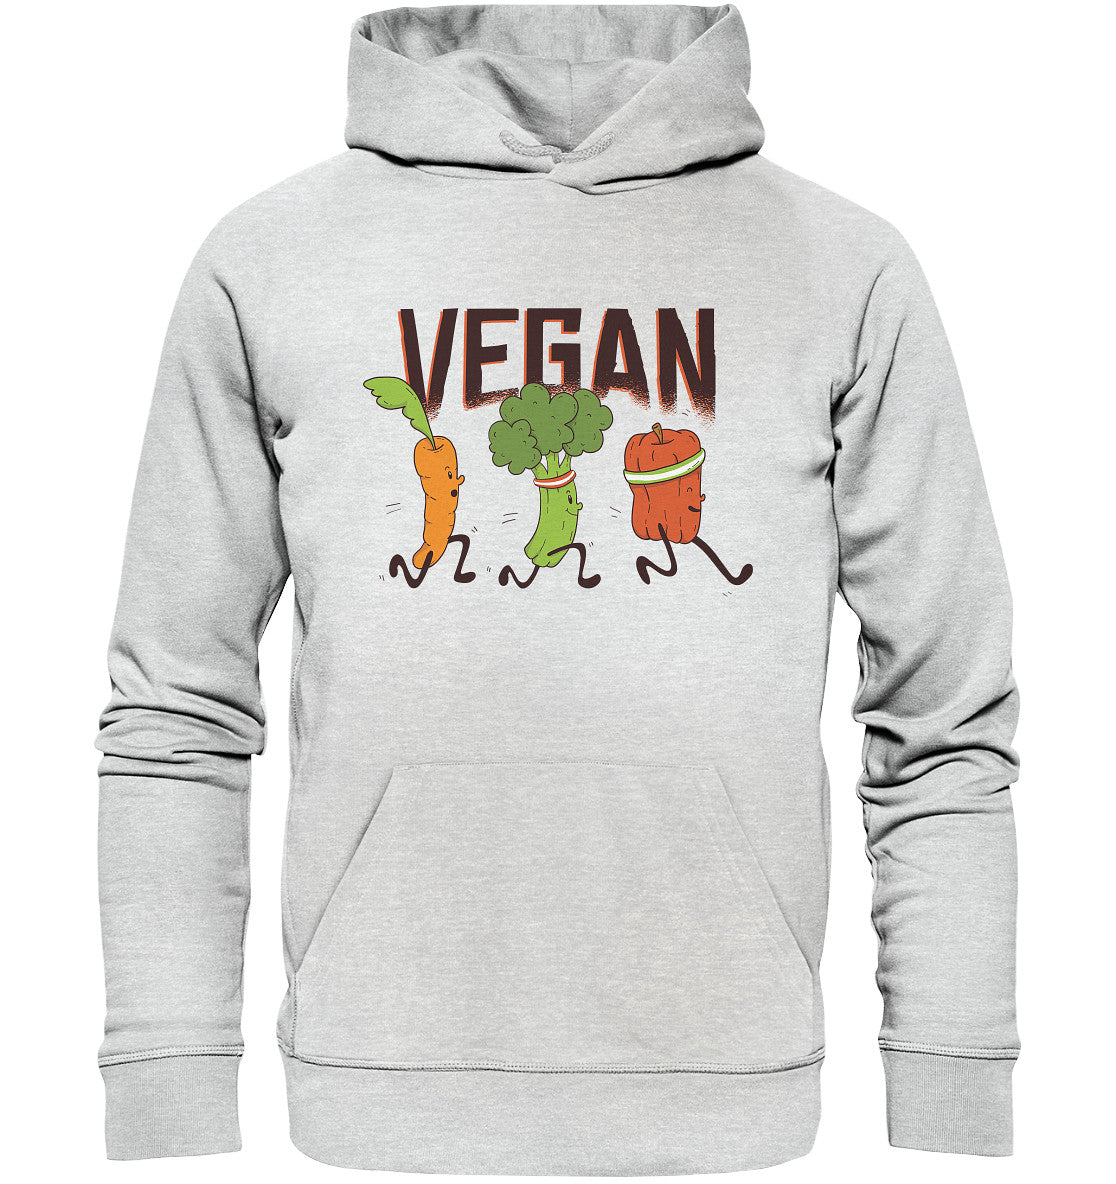 Vegan runners - Unisex Premium Hoodie